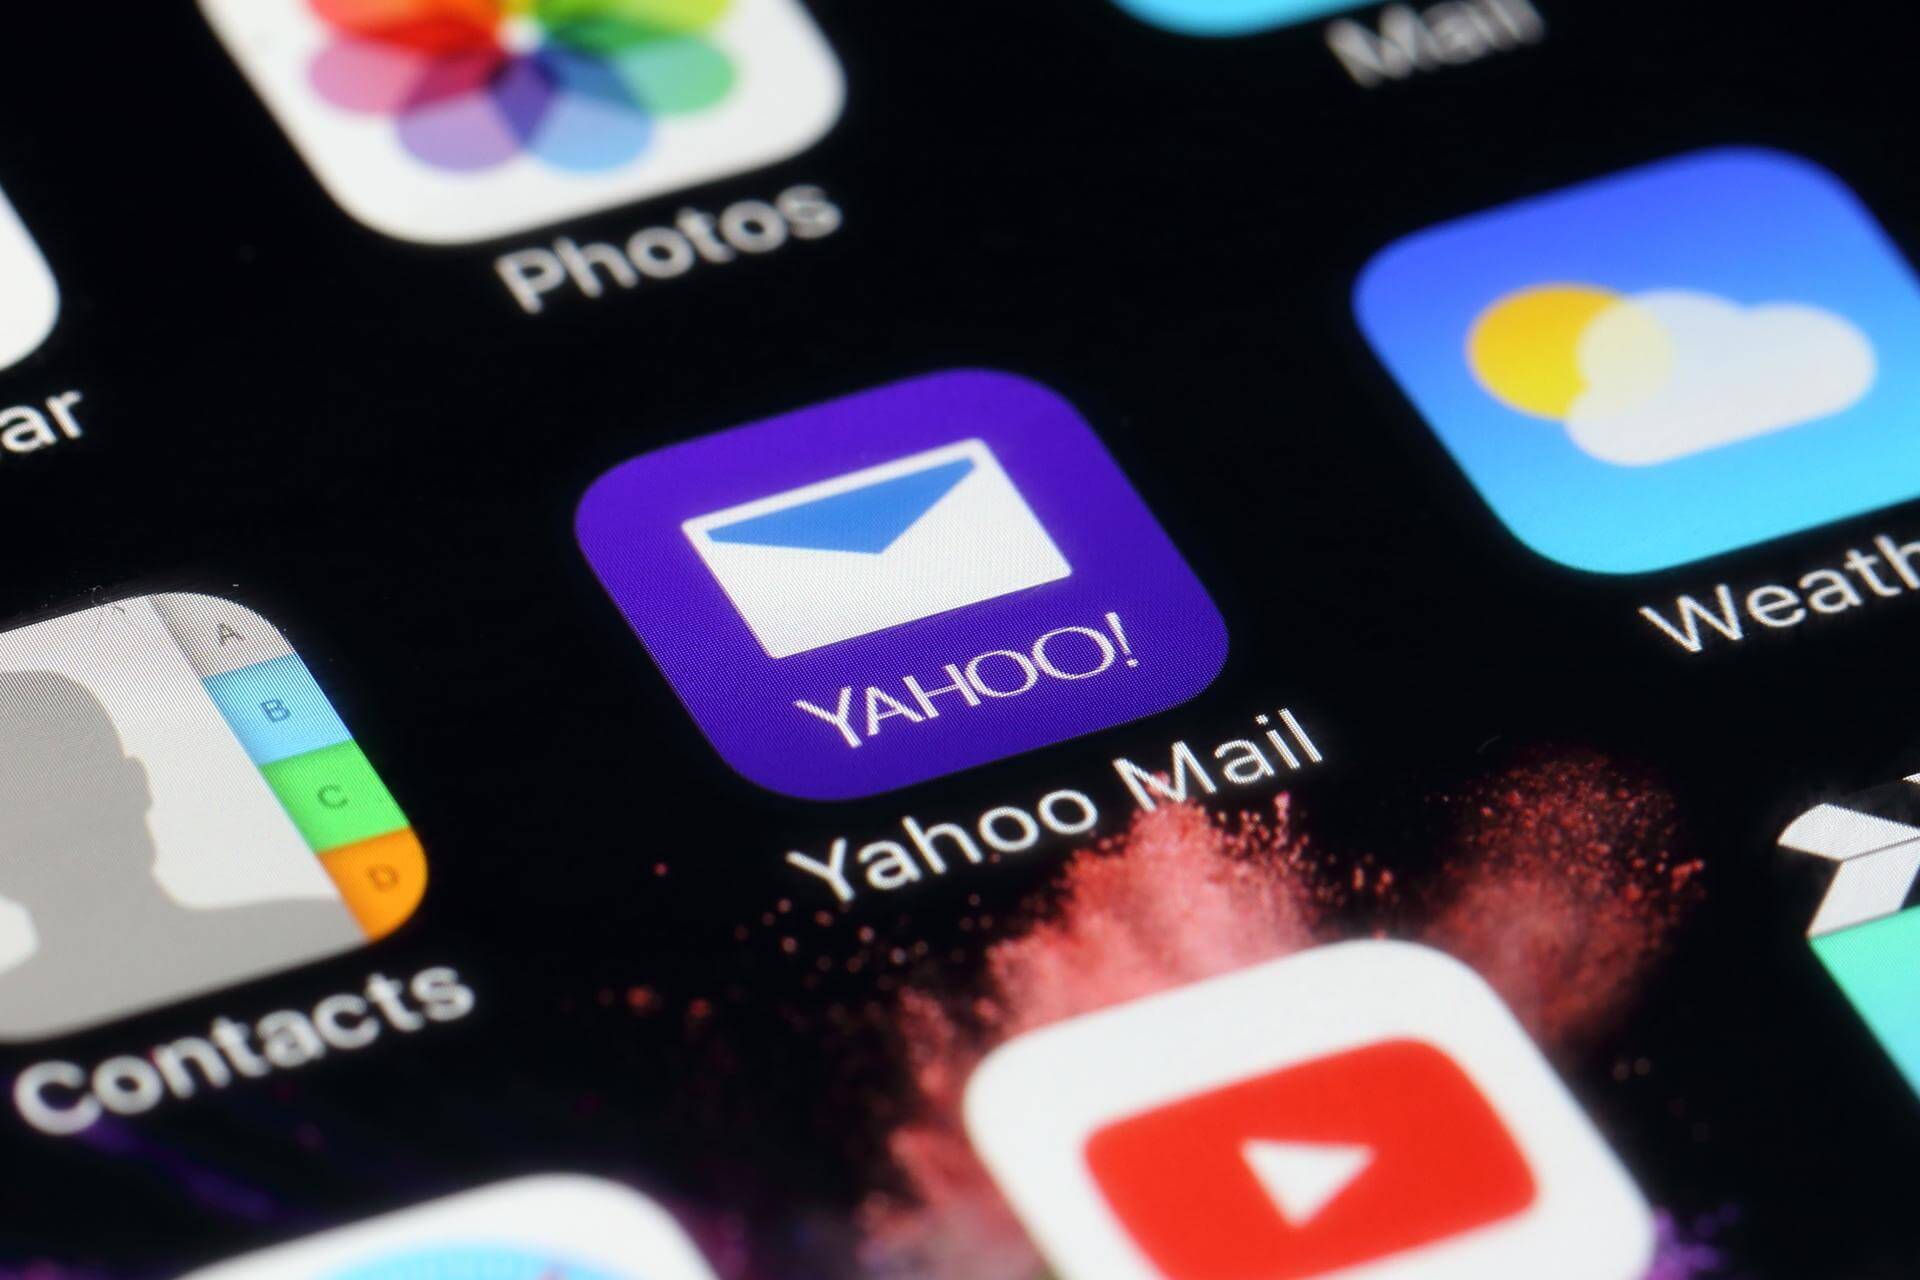 Yahoo Mail windows 10